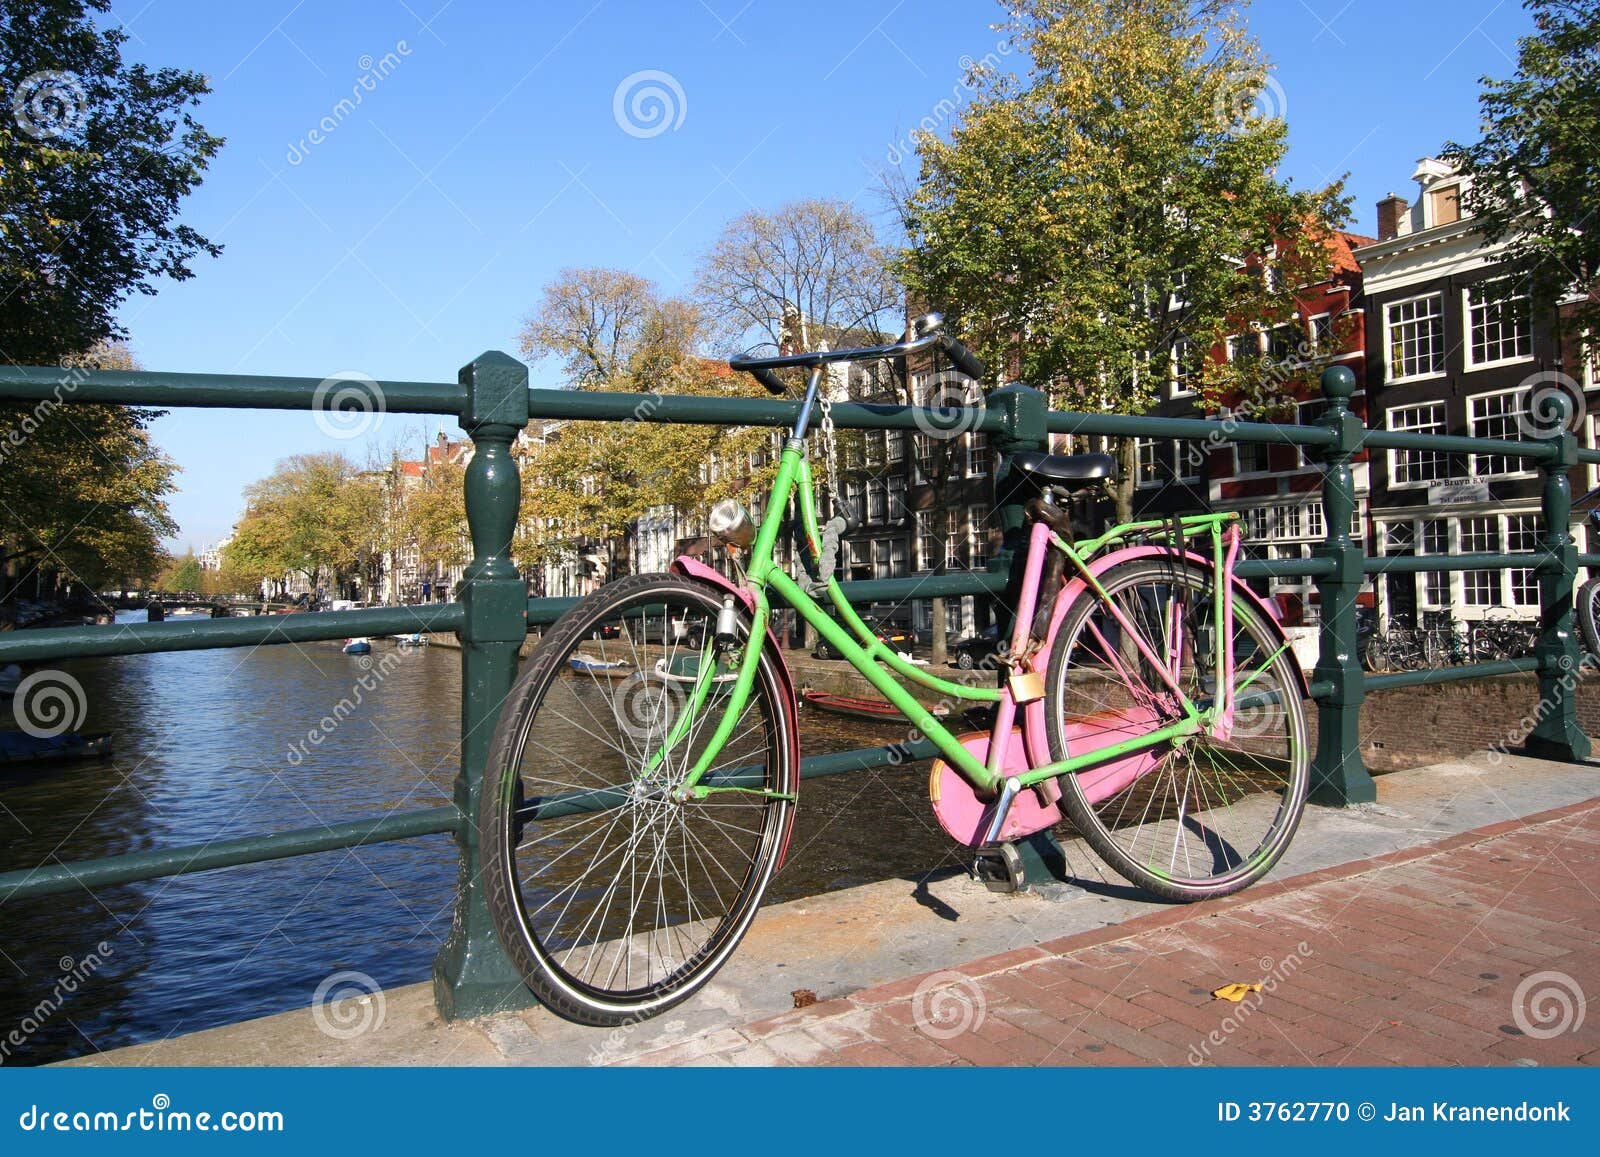 Amsterdam Bicycle stock photo. Image of bicycle, dutch - 3762770